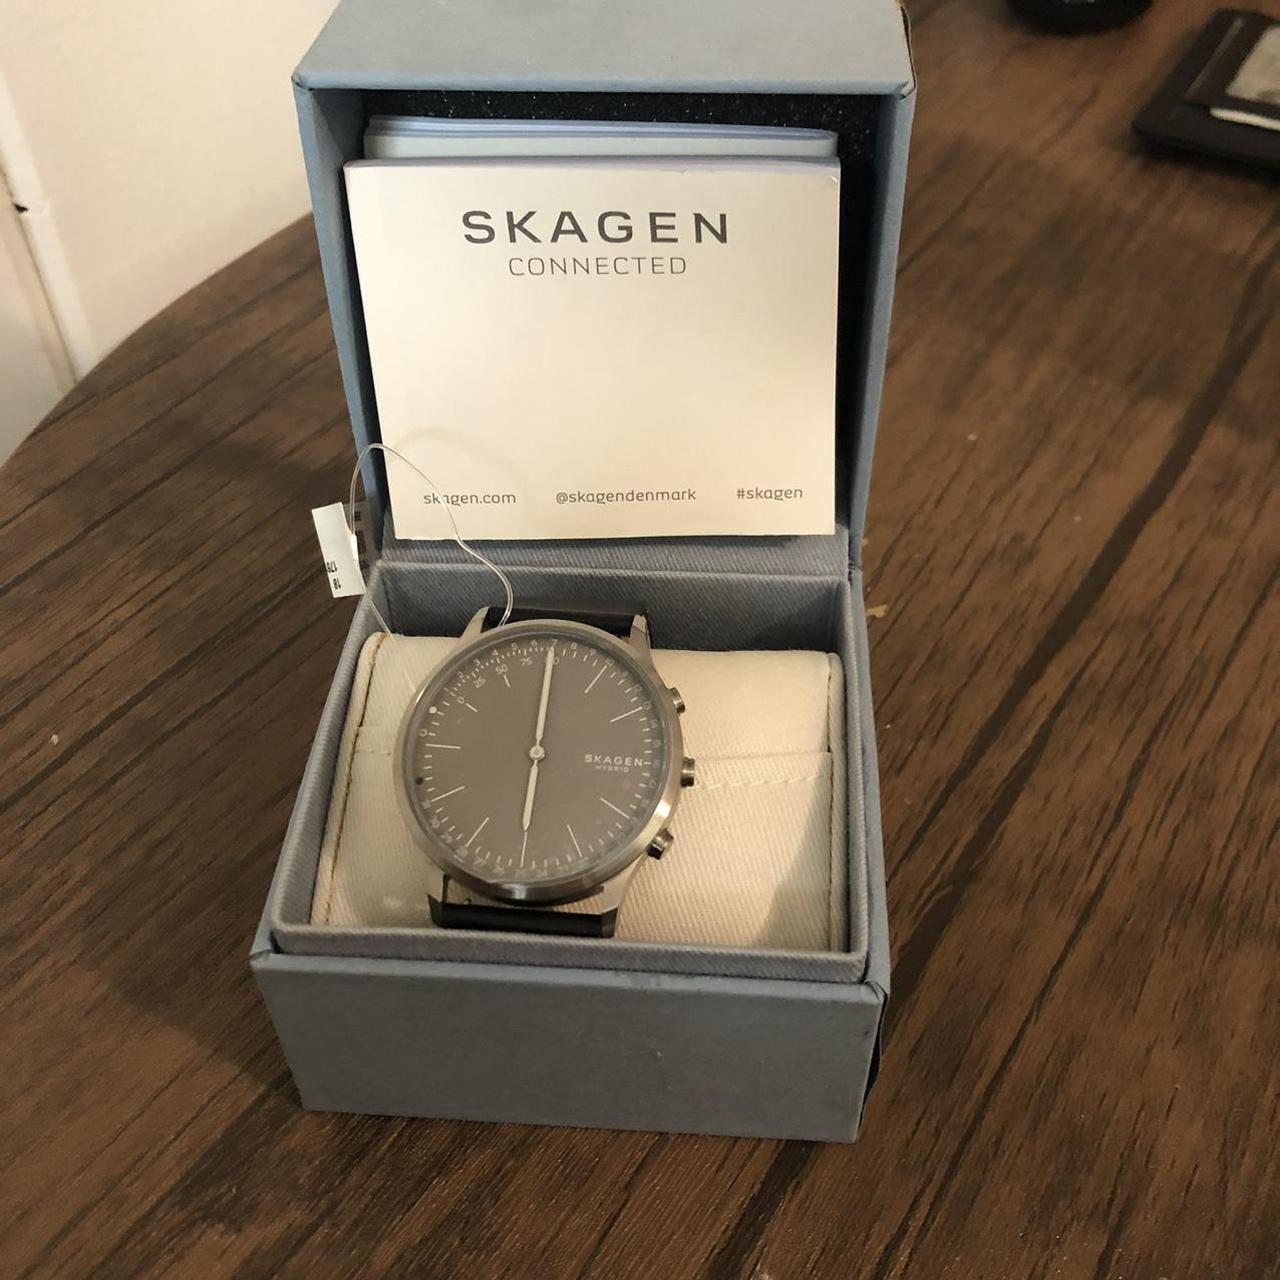 Product Image 1 - Skagen Jorn Connected Hybrid Smartwatch